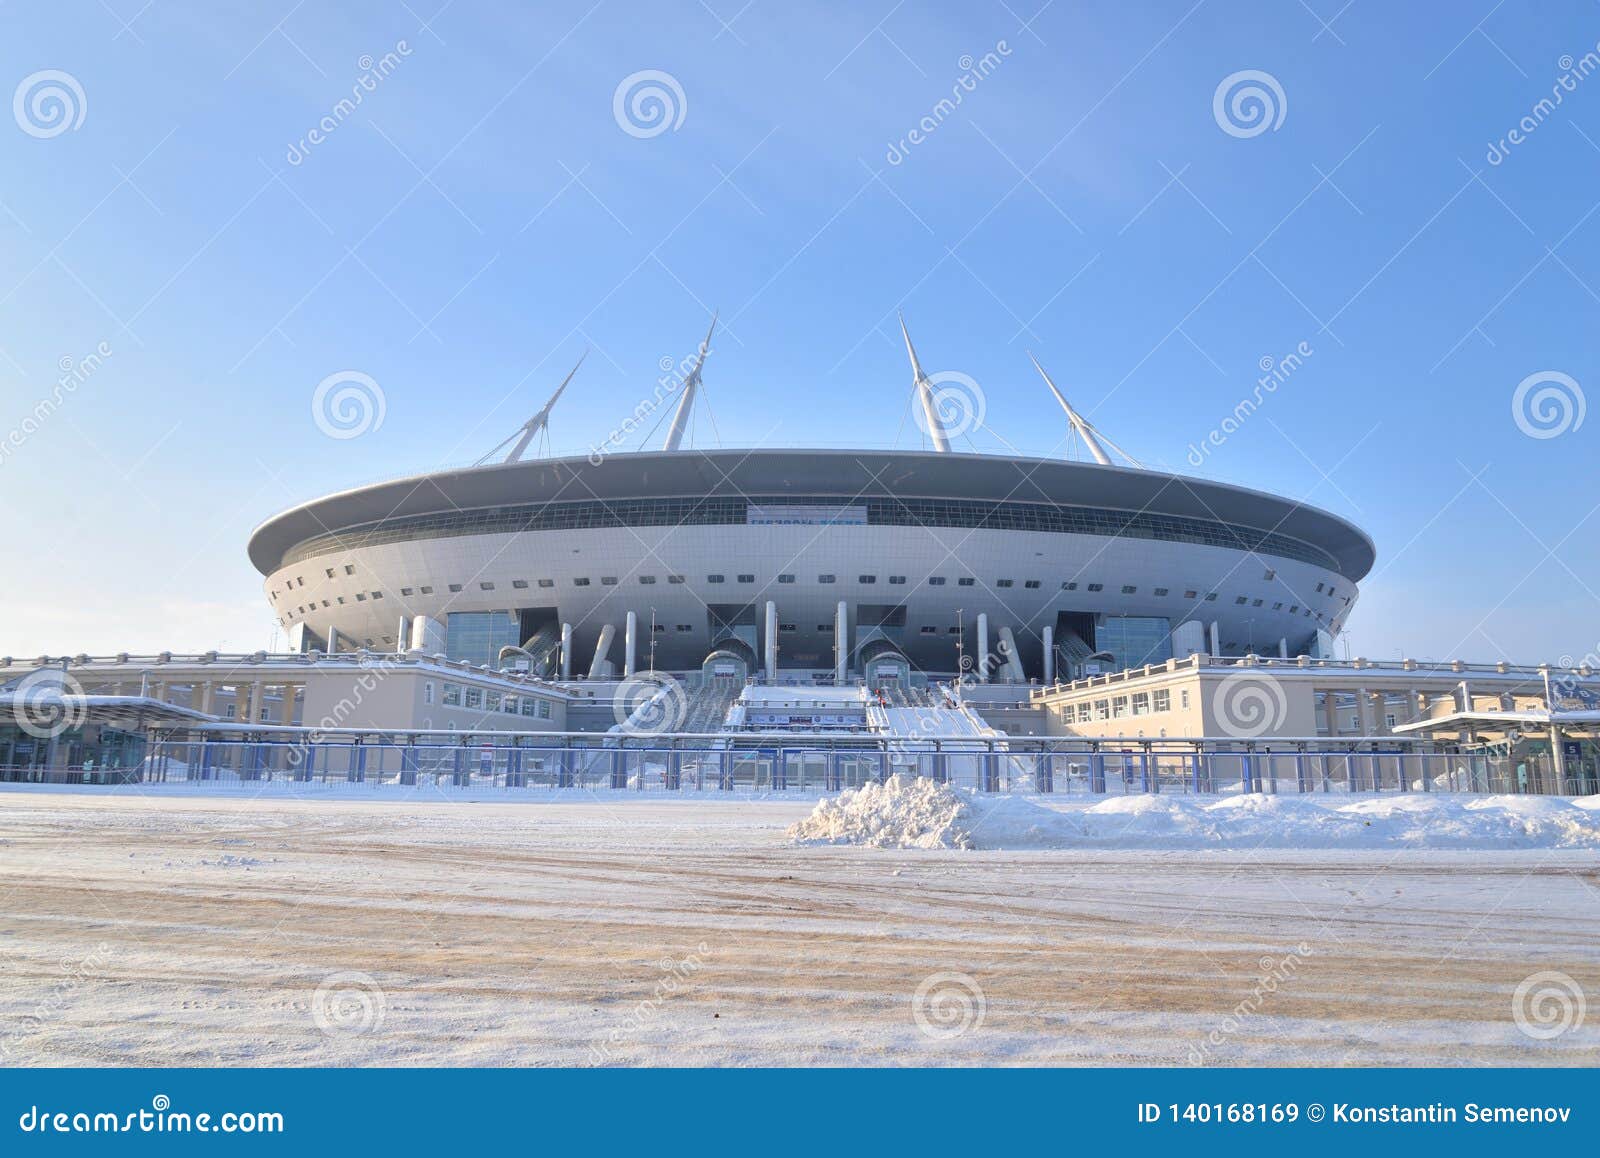 Stadium Gazprom Arena At Winter Editorial Stock Image Image Of Outdoor Championship